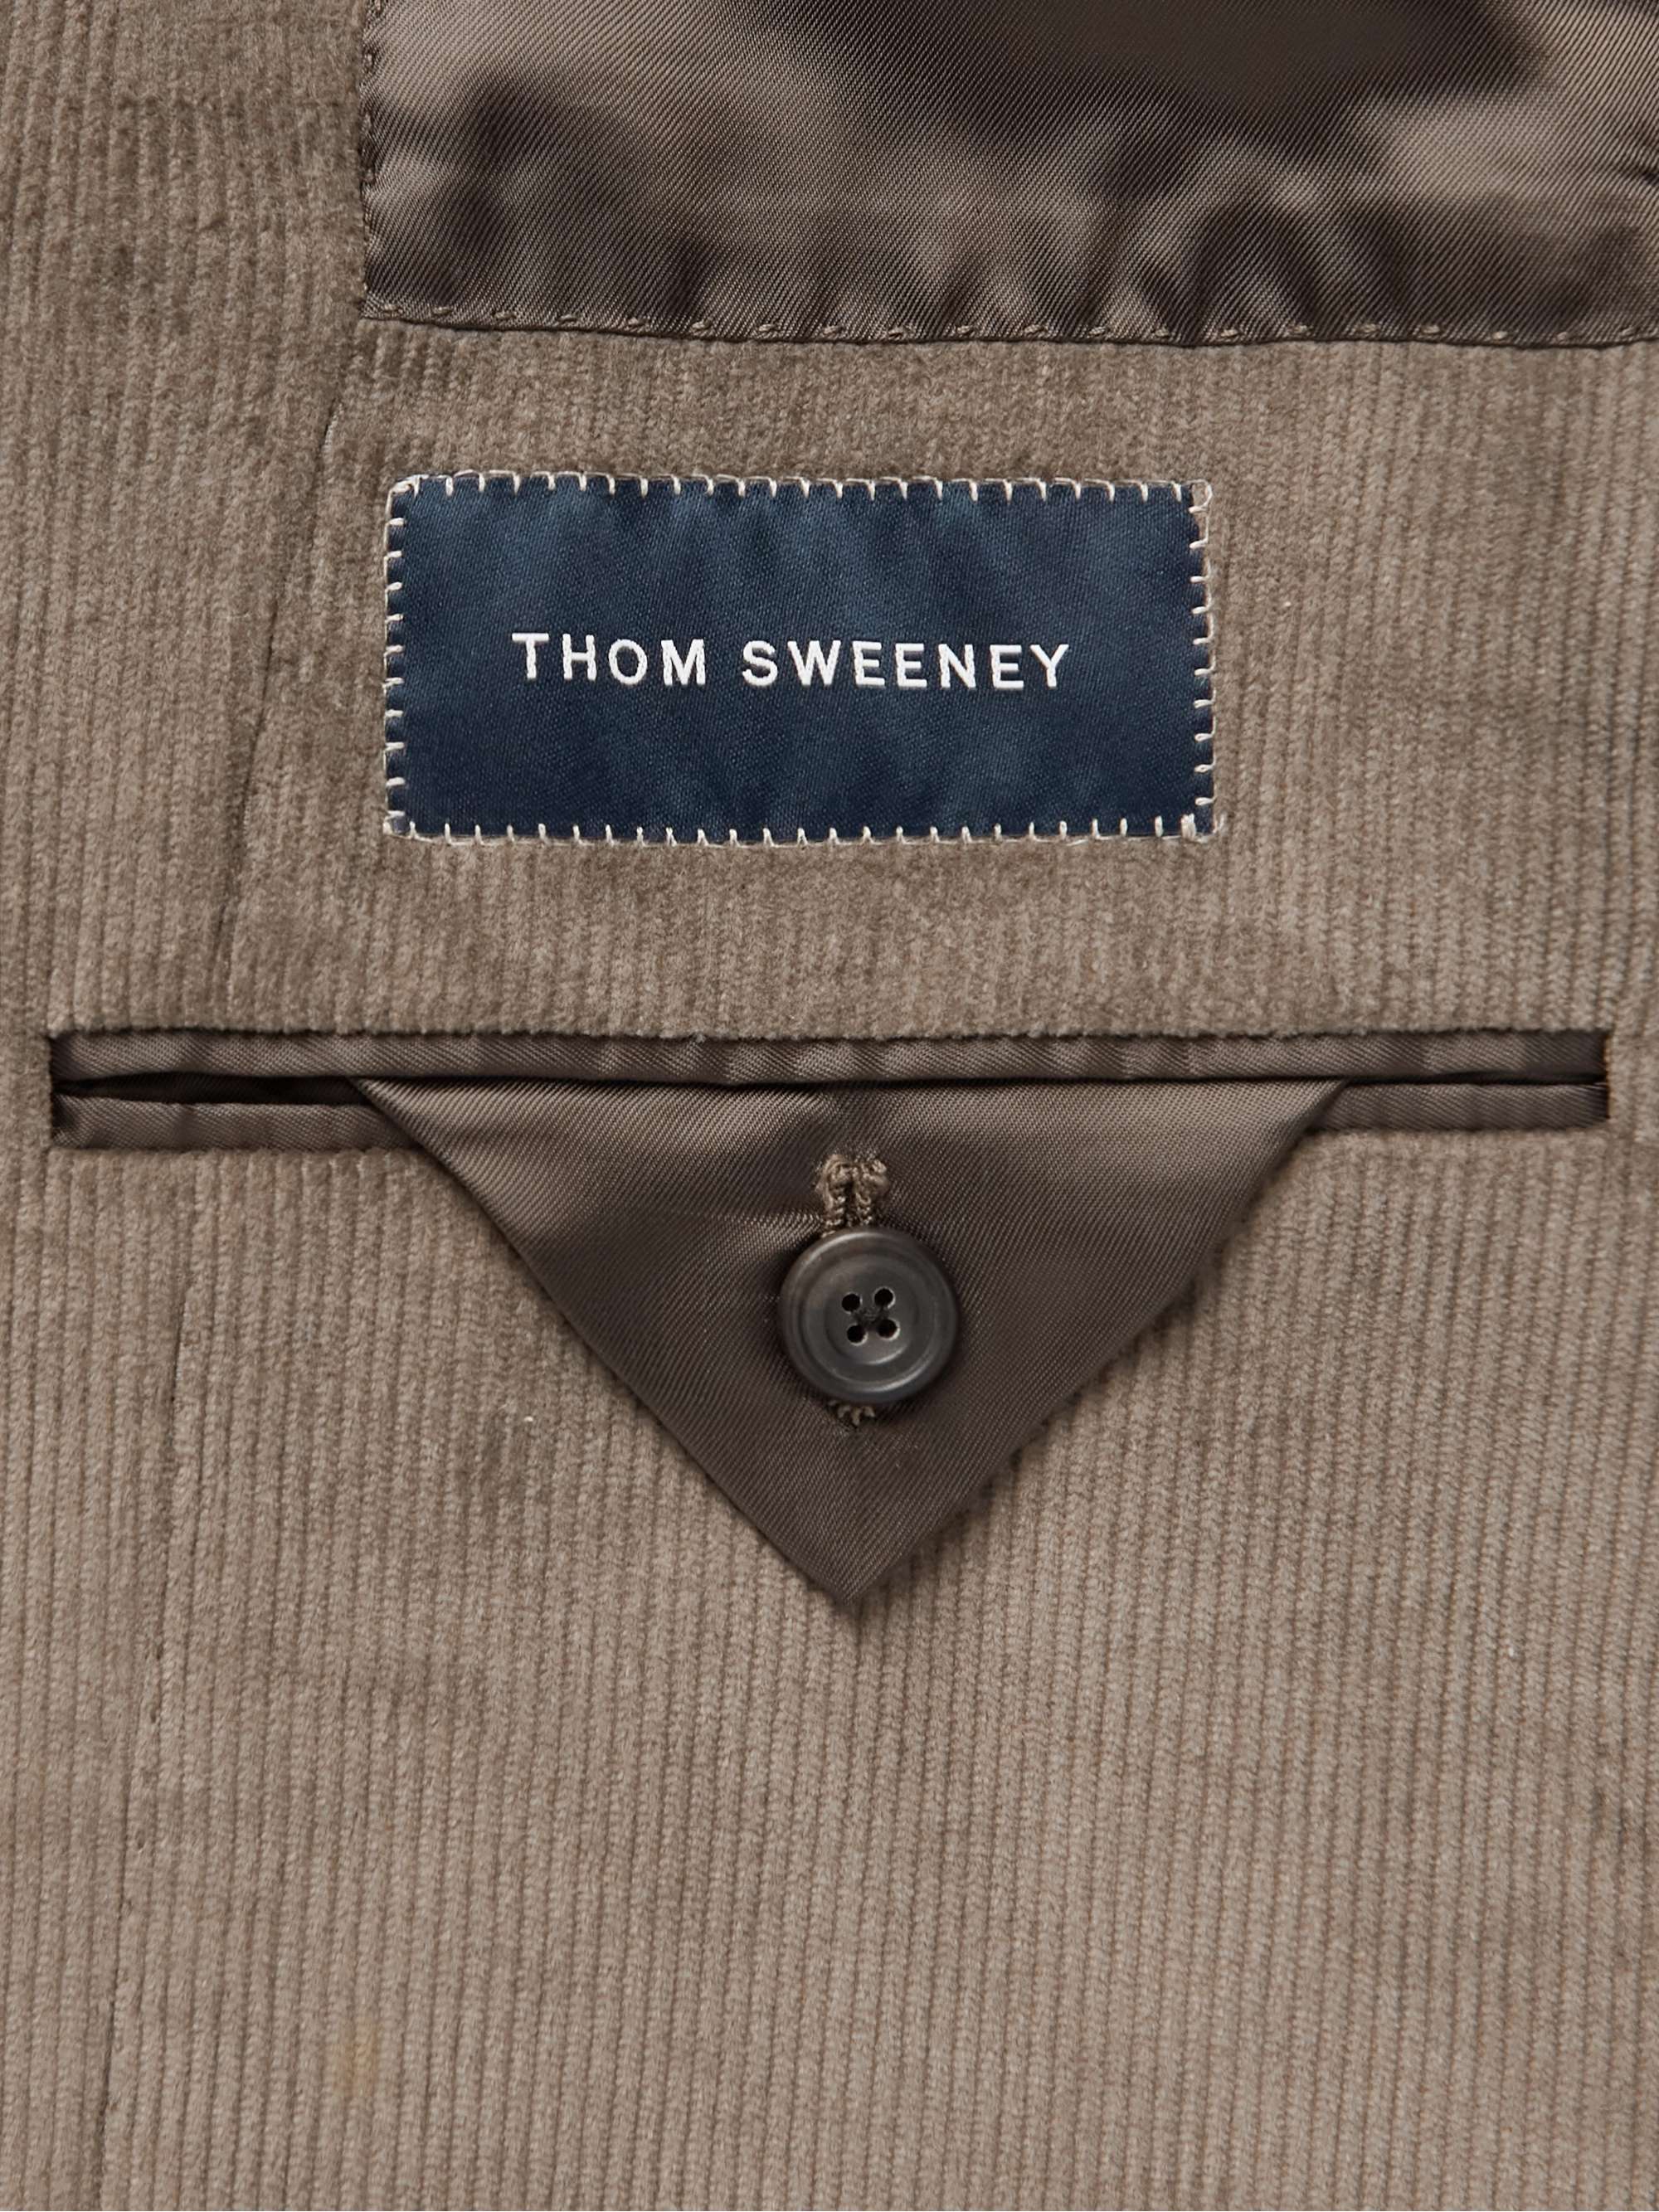 THOM SWEENEY Slim-Fit Stretch Cotton and Wool-Blend Corduroy Blazer